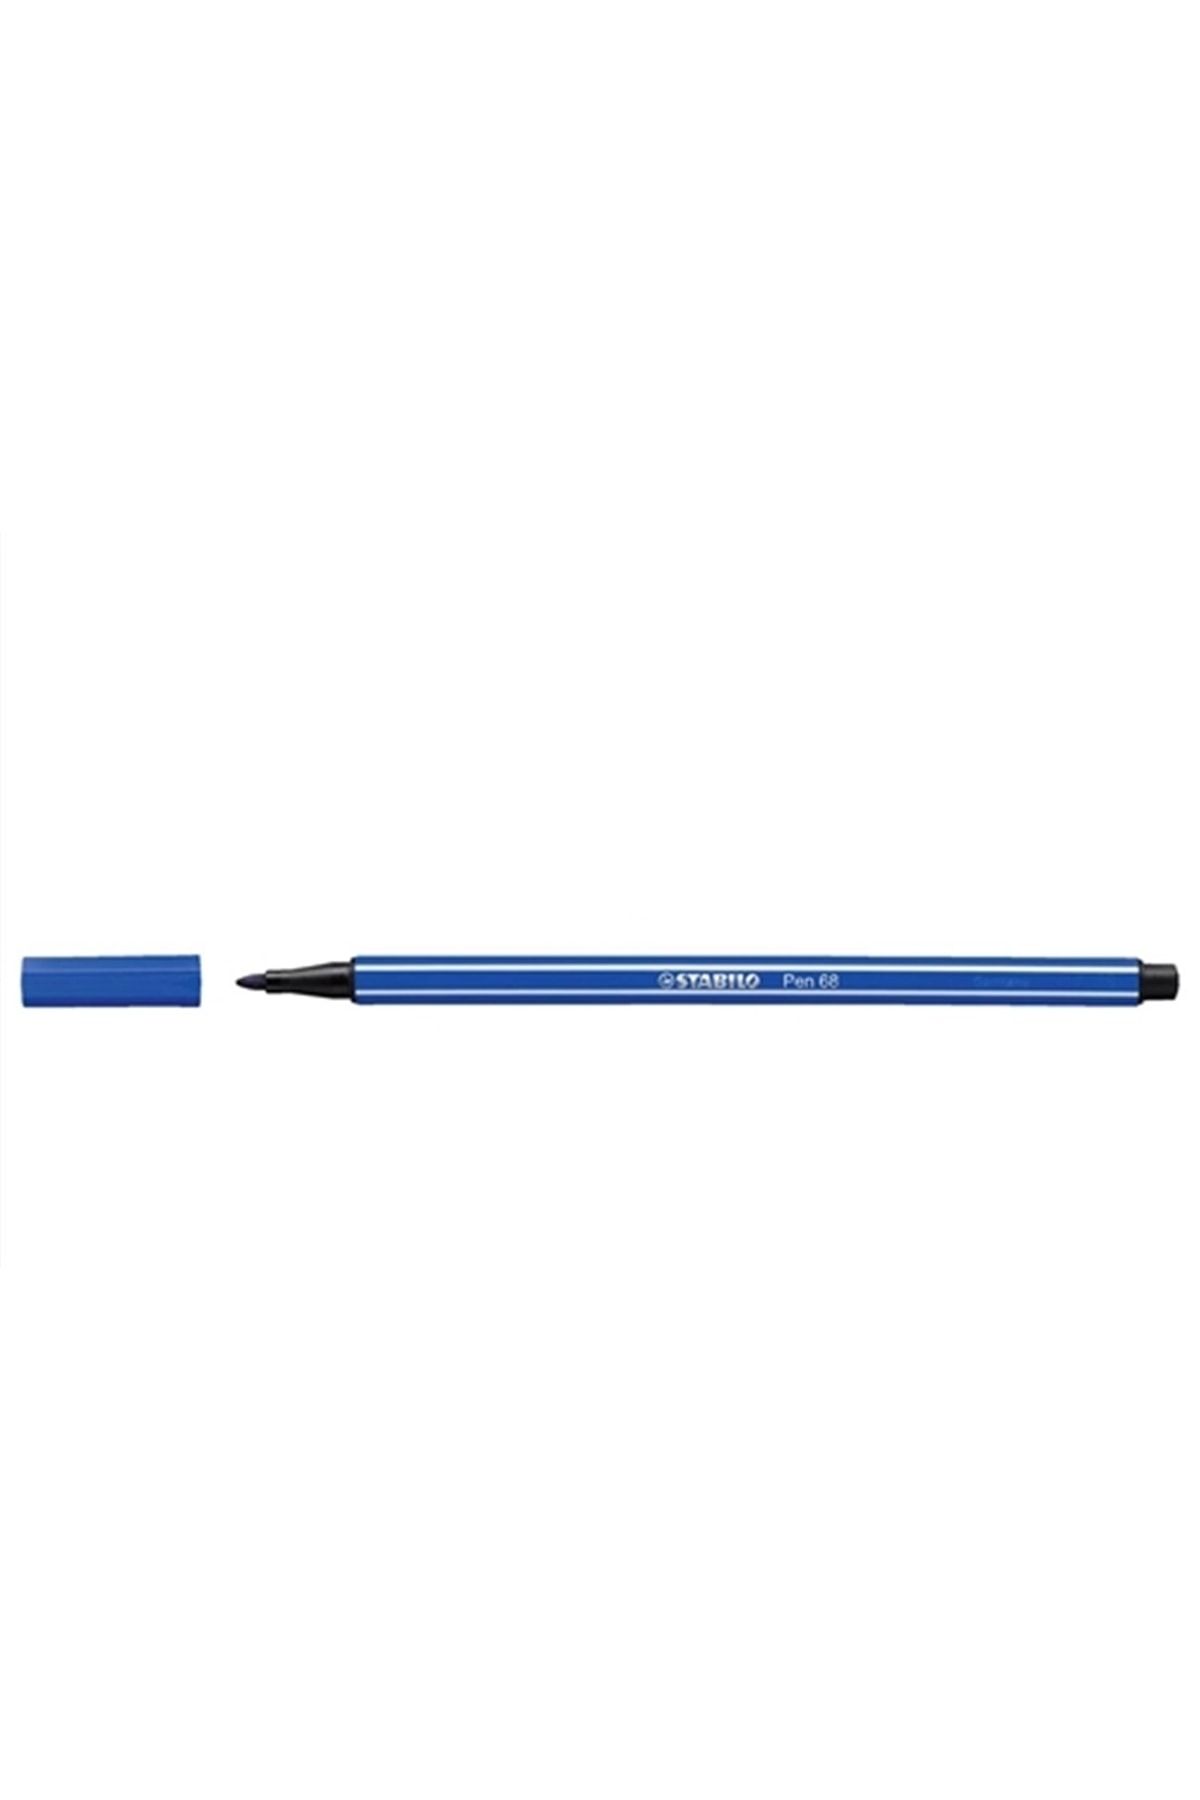 Stabilo Pen 68 - Koyu Mavi 68/32 51002503